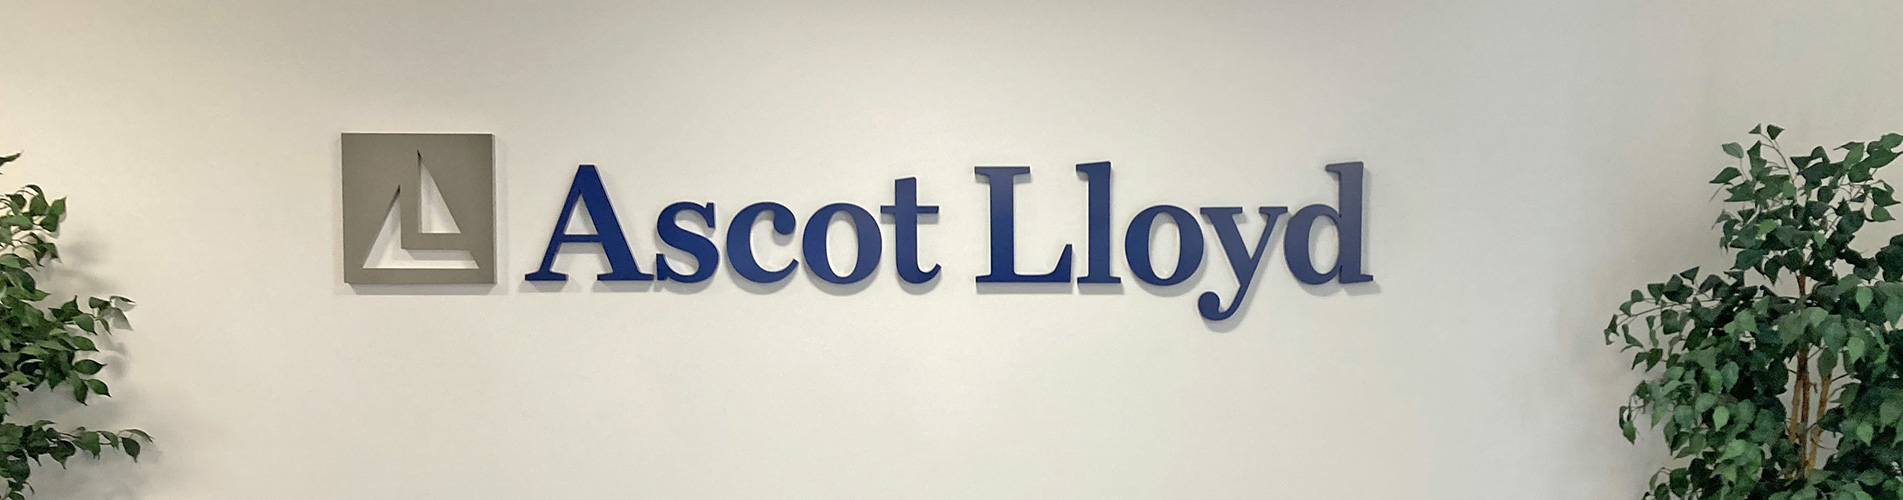 Ascot Lloyd Privacy Policy